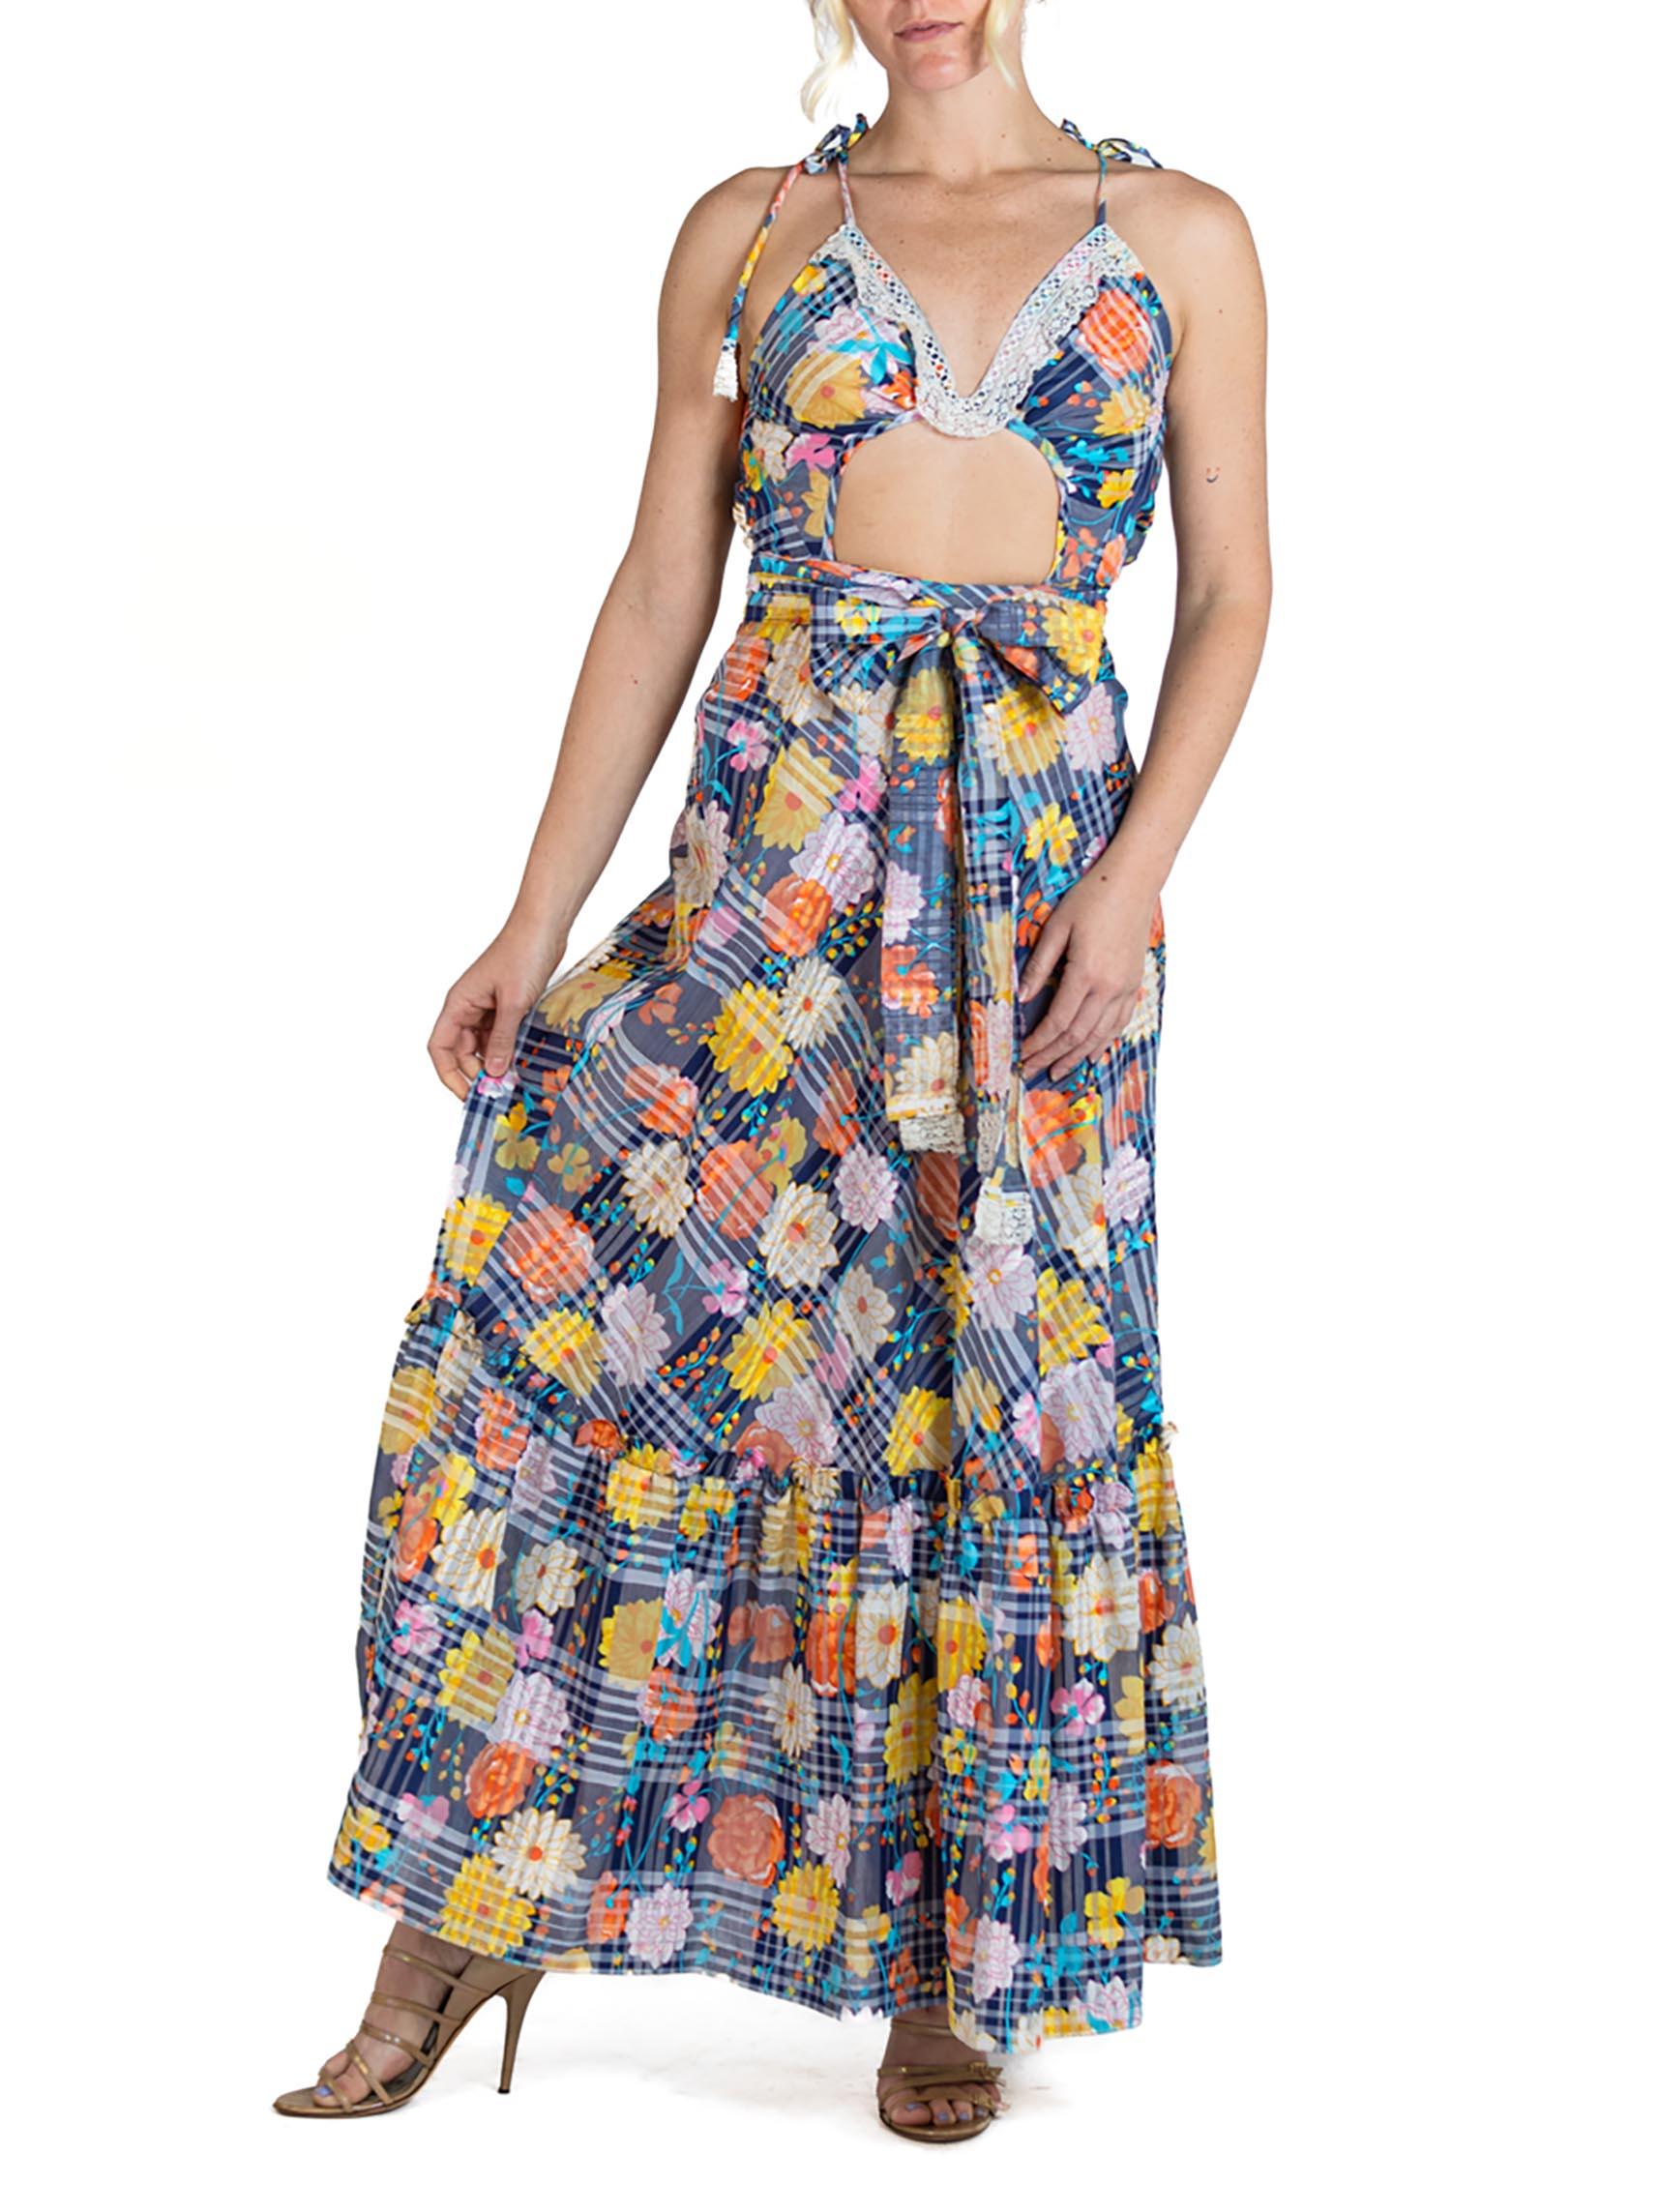 MORPHEW ATELIER Multicolor Blue Floral Backless Cut-Out Summer Dress For Sale 4